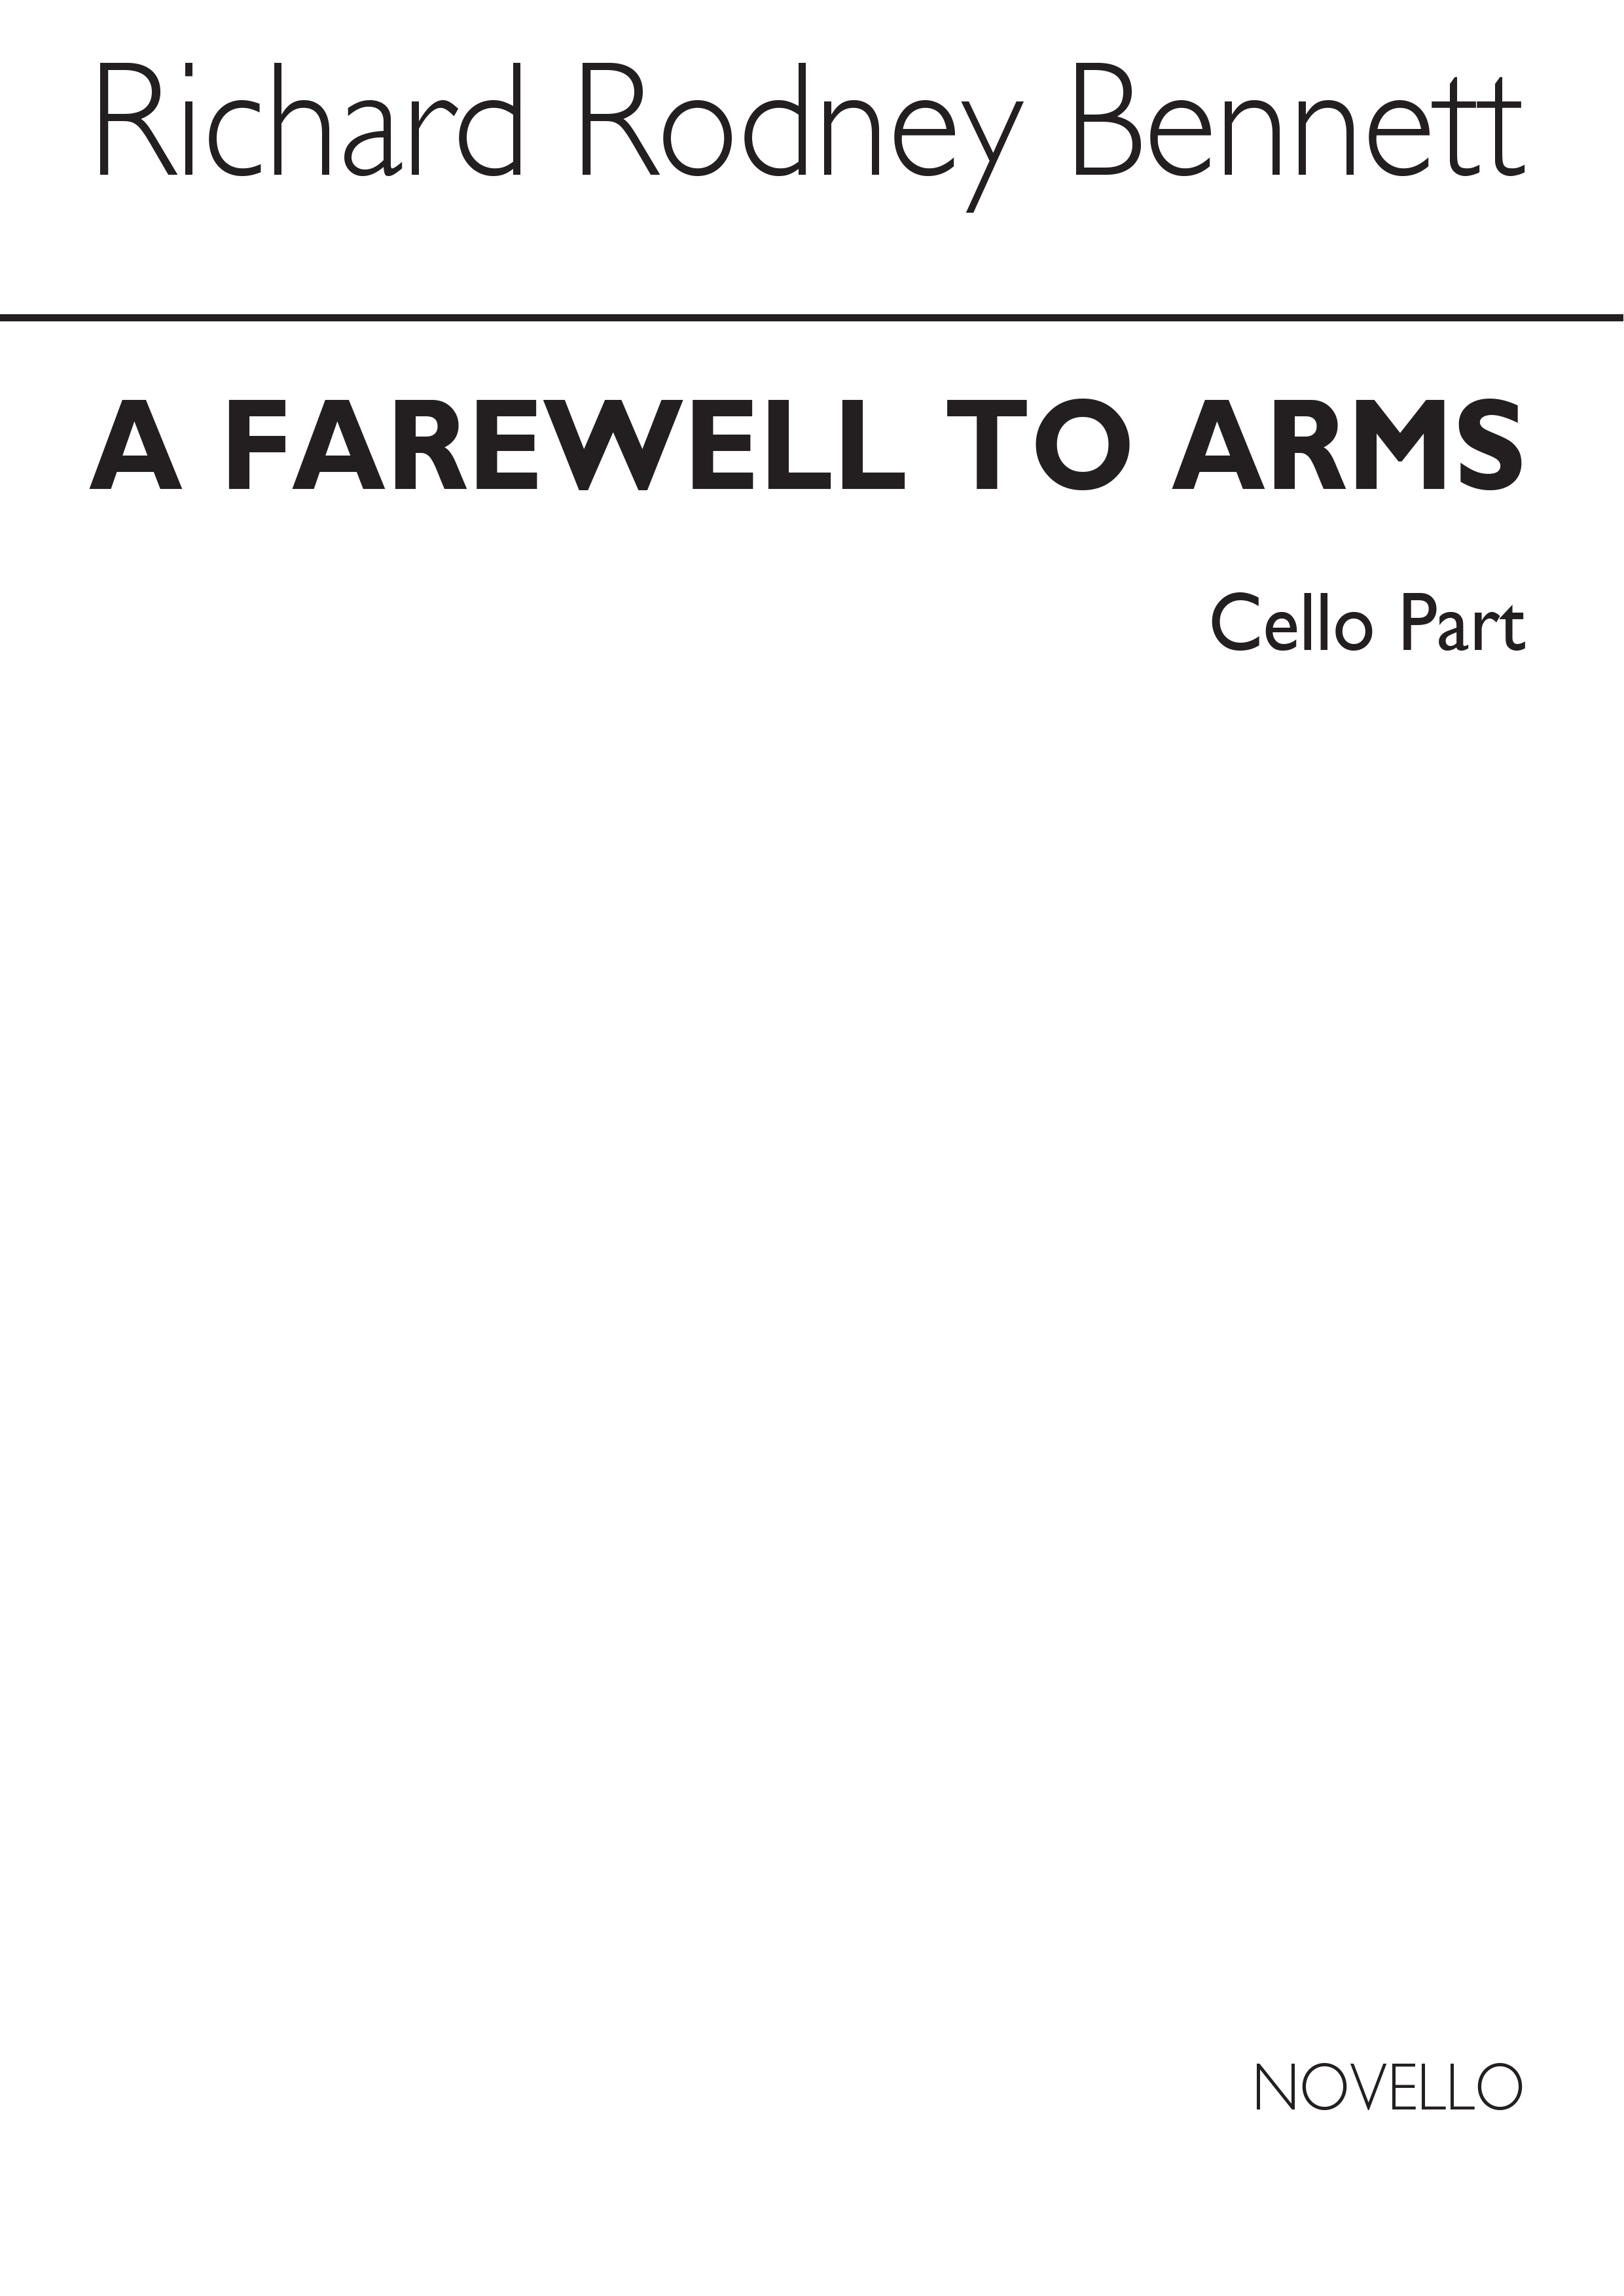 RR Bennett: A Farewell To Arms (Cello Part)